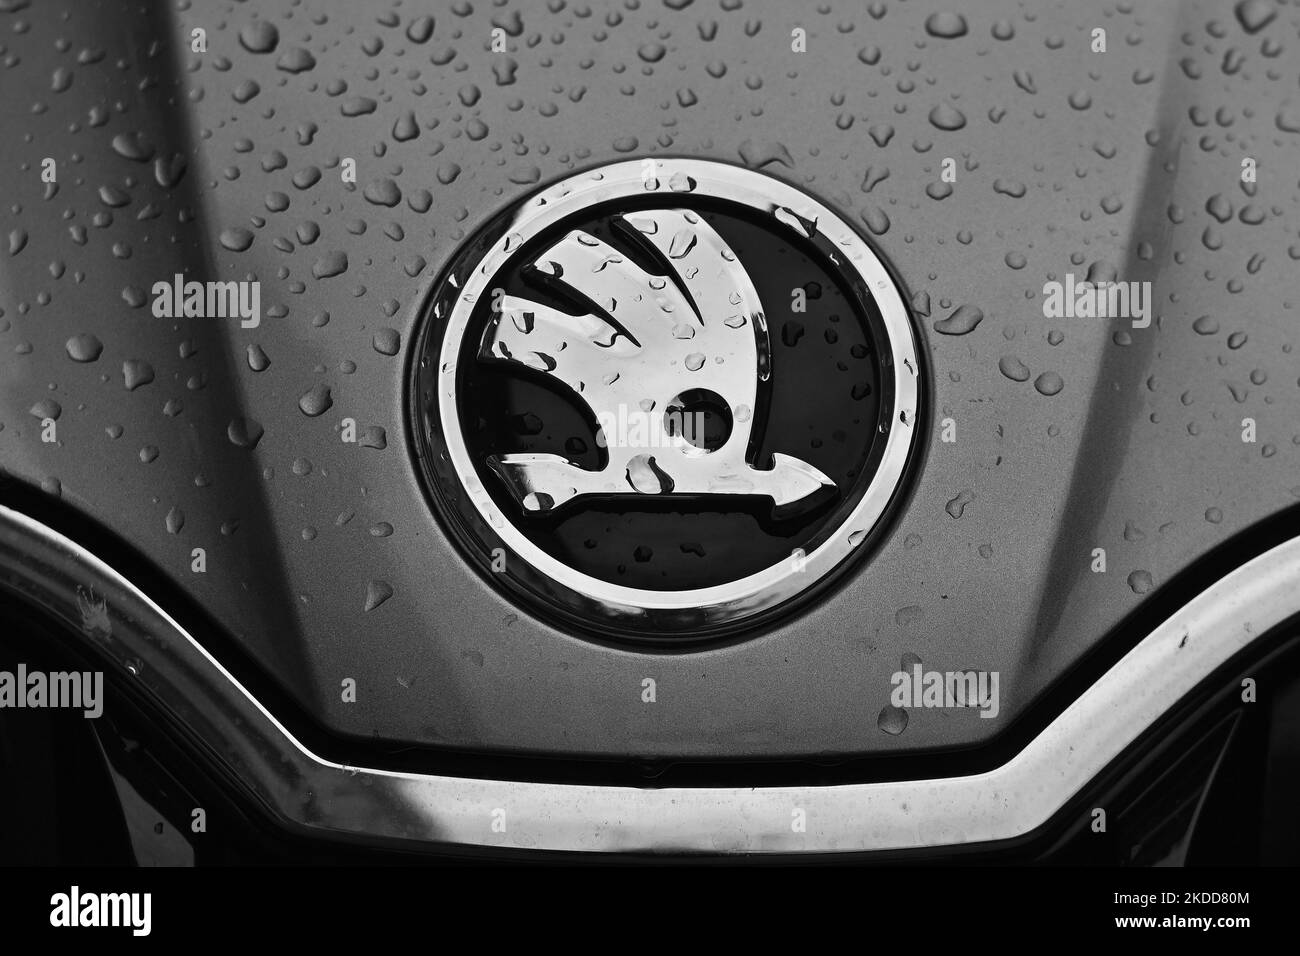 Logo skoda Black and White Stock Photos & Images - Alamy